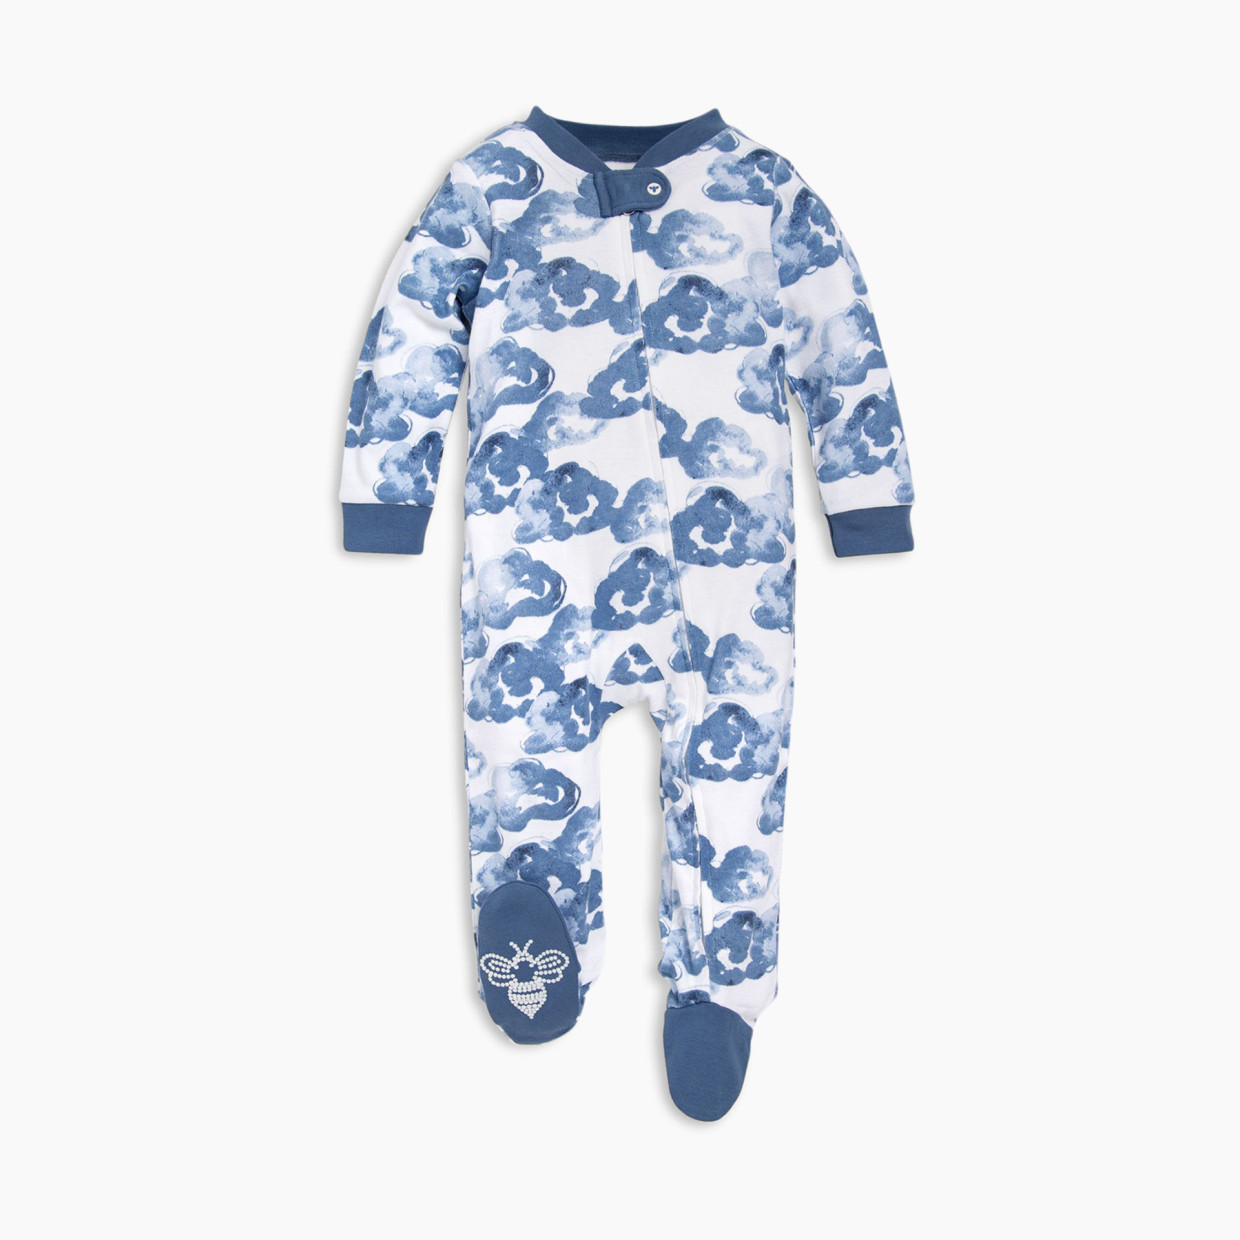 Burt's Bees Baby Organic Sleep & Play Footie Pajamas - Moonlight Clouds, Newborn.